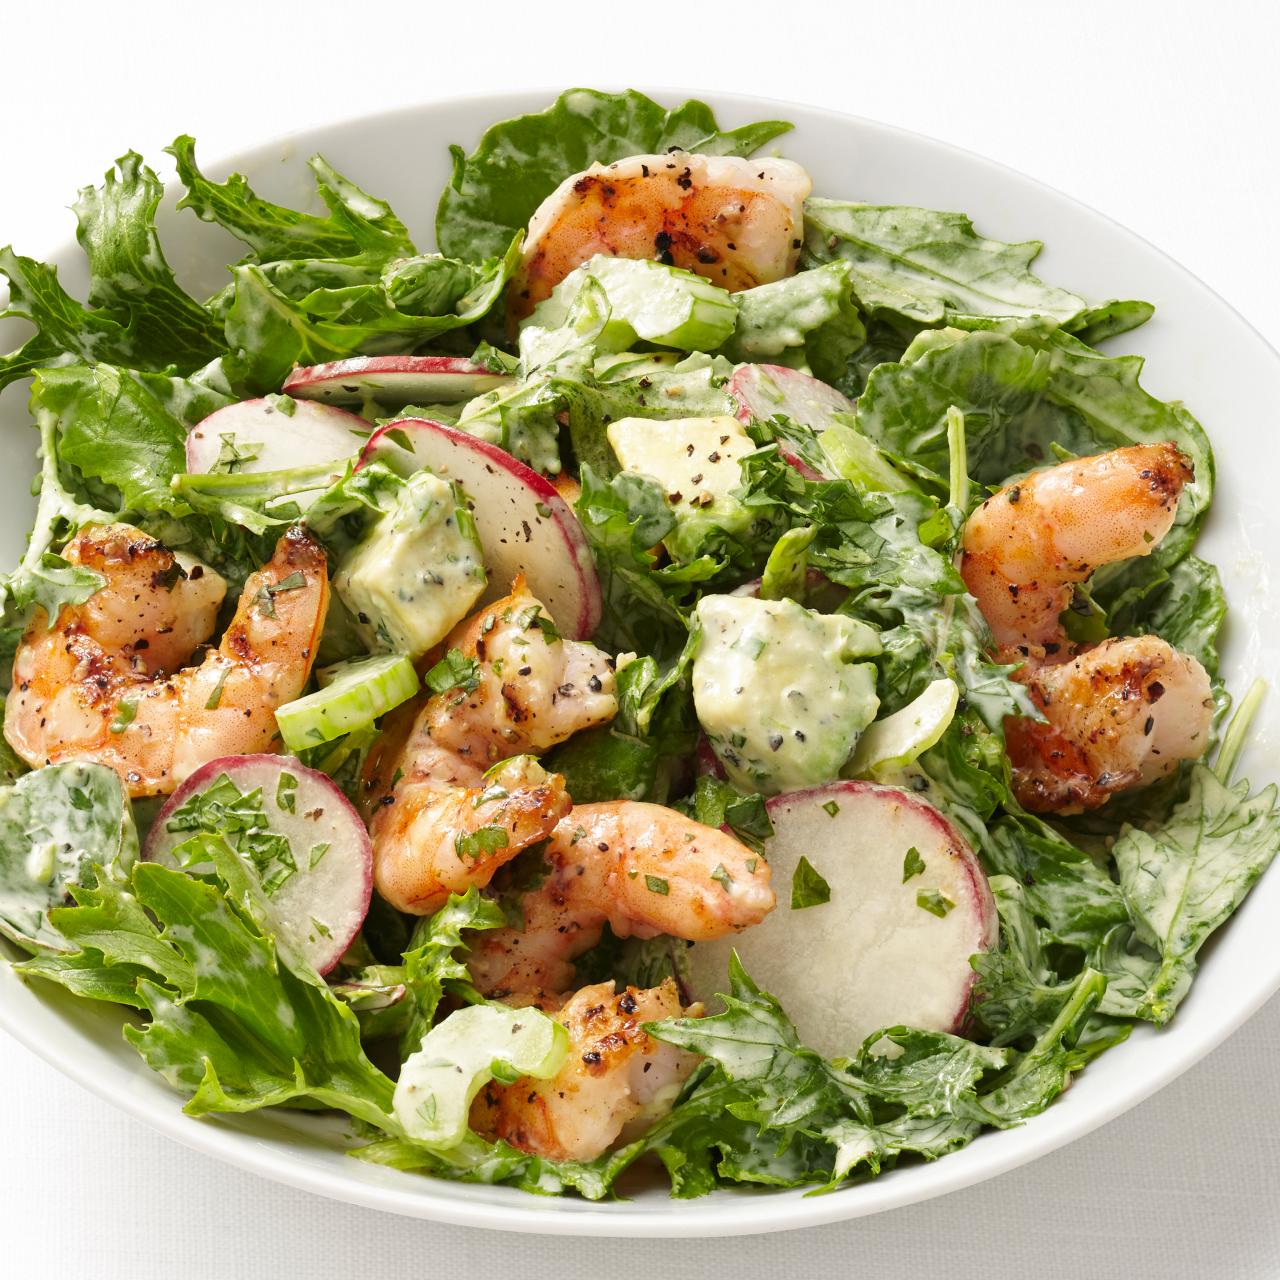 https://food.fnr.sndimg.com/content/dam/images/food/fullset/2014/6/11/1/FNM_070114-Shrimp-and-Avocado-Salad-Recipe_s4x3.jpg.rend.hgtvcom.1280.1280.suffix/1402600023128.jpeg